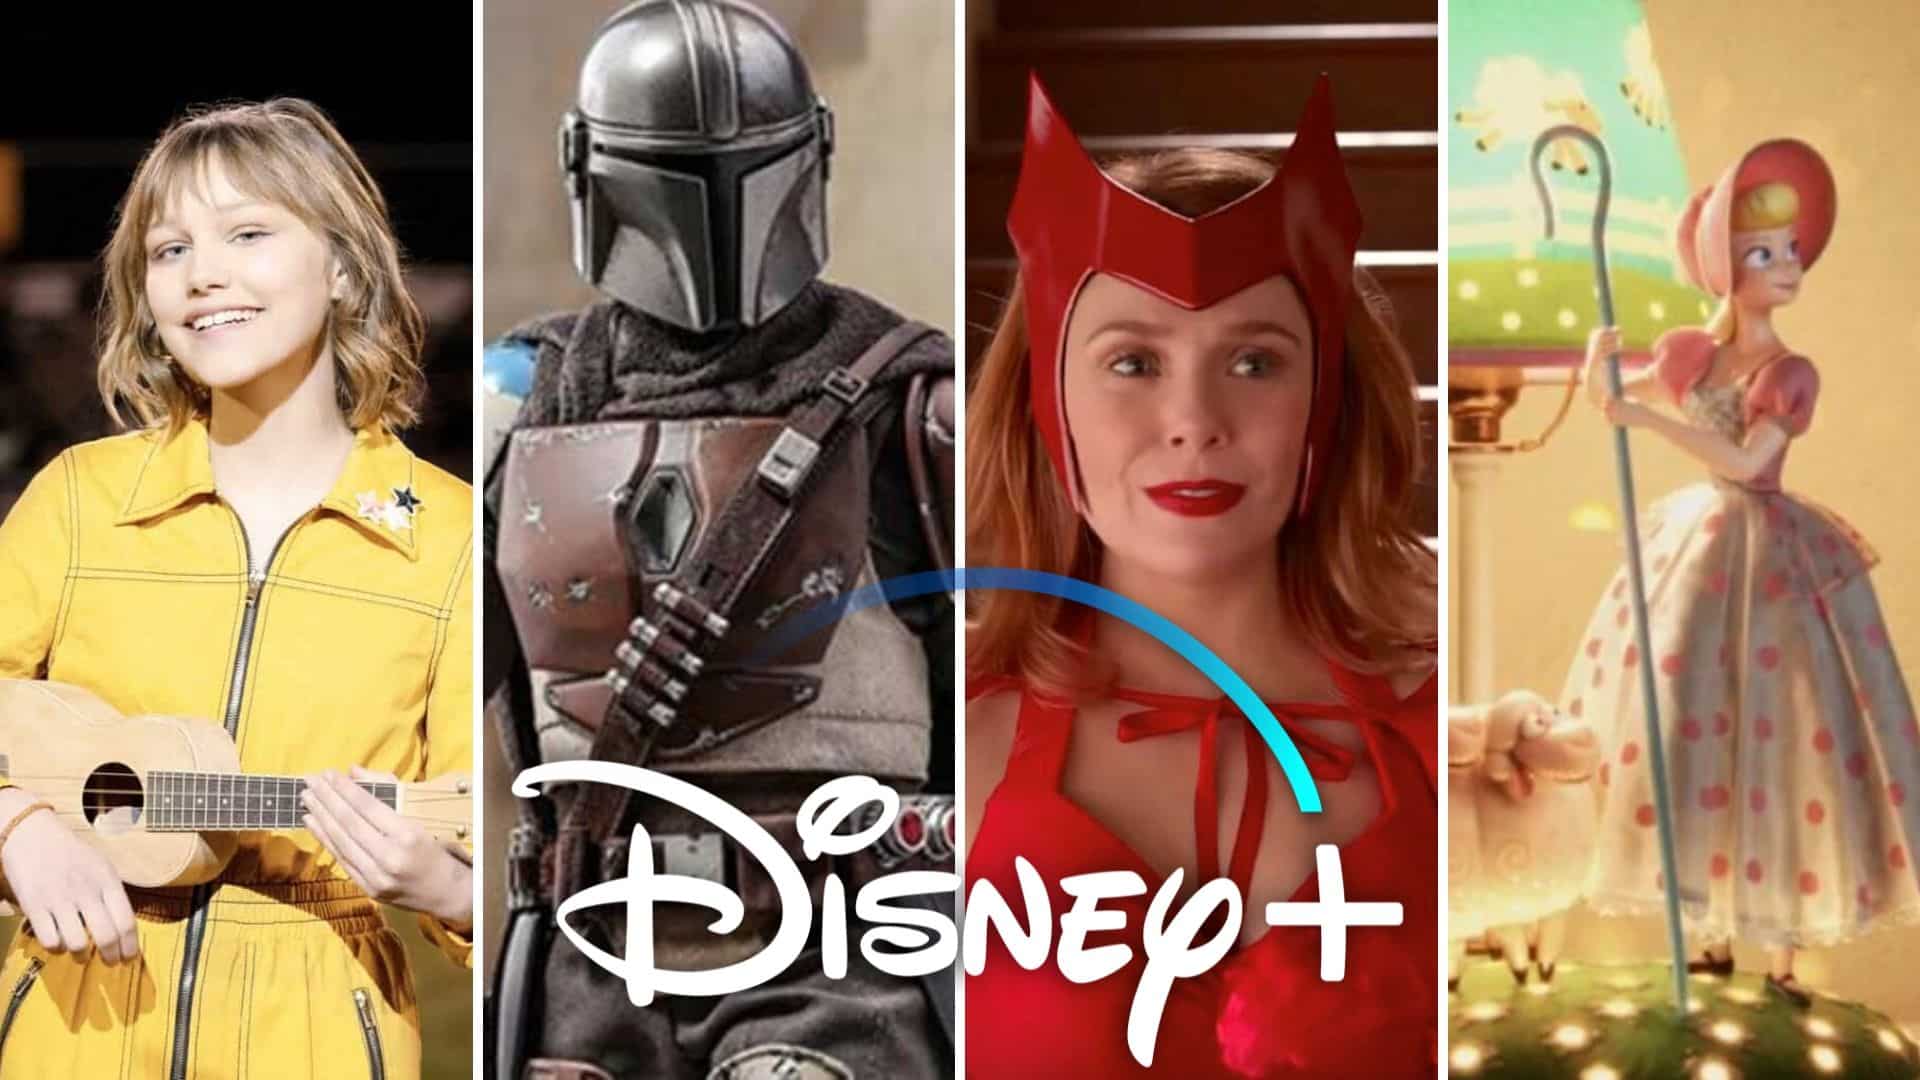 Disney + | Film e Serie TV in catalogo dal 24 marzo 2020